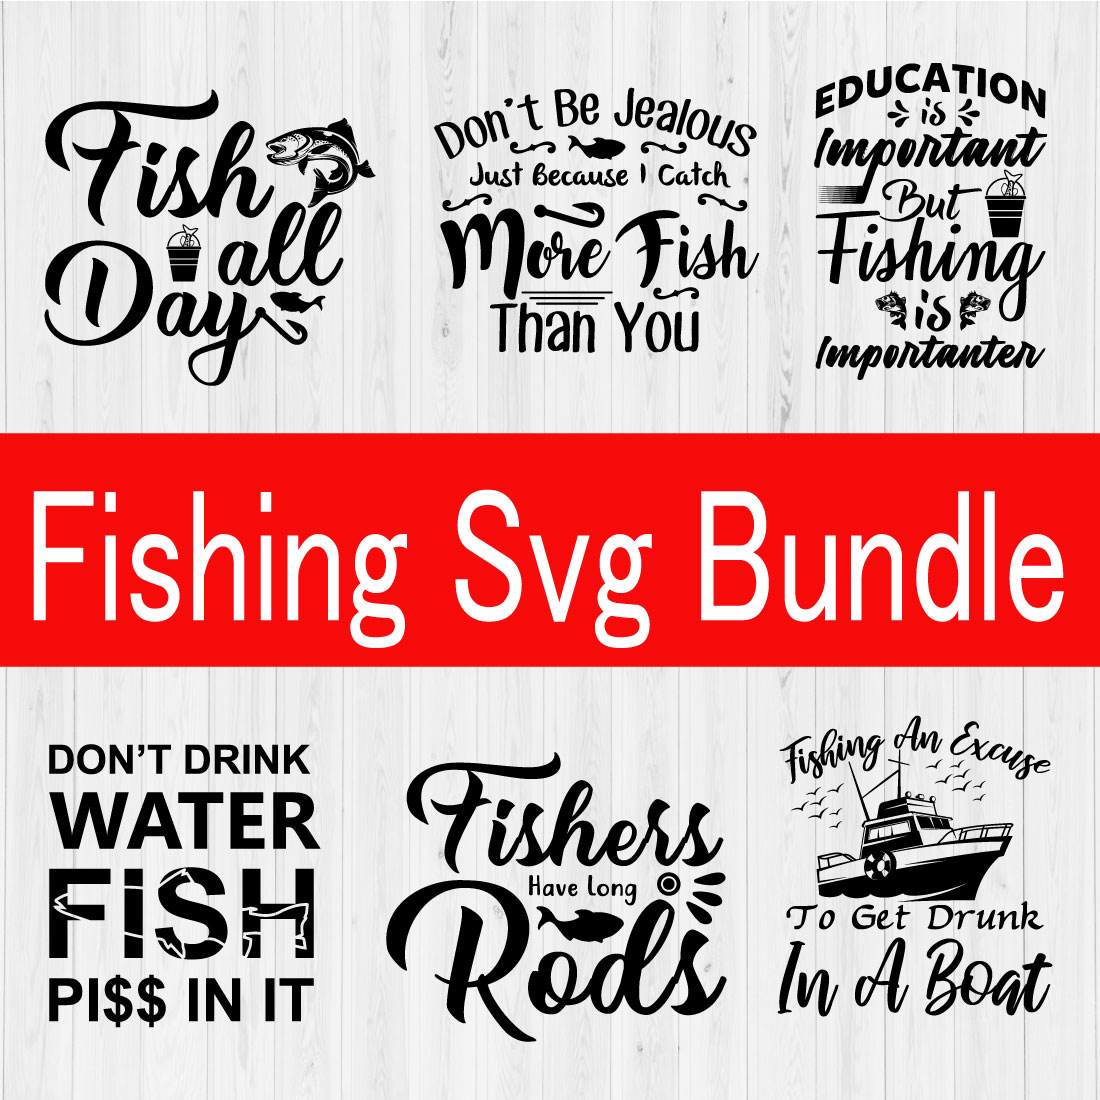 Fishing Svg Bundle Vol3 cover image.